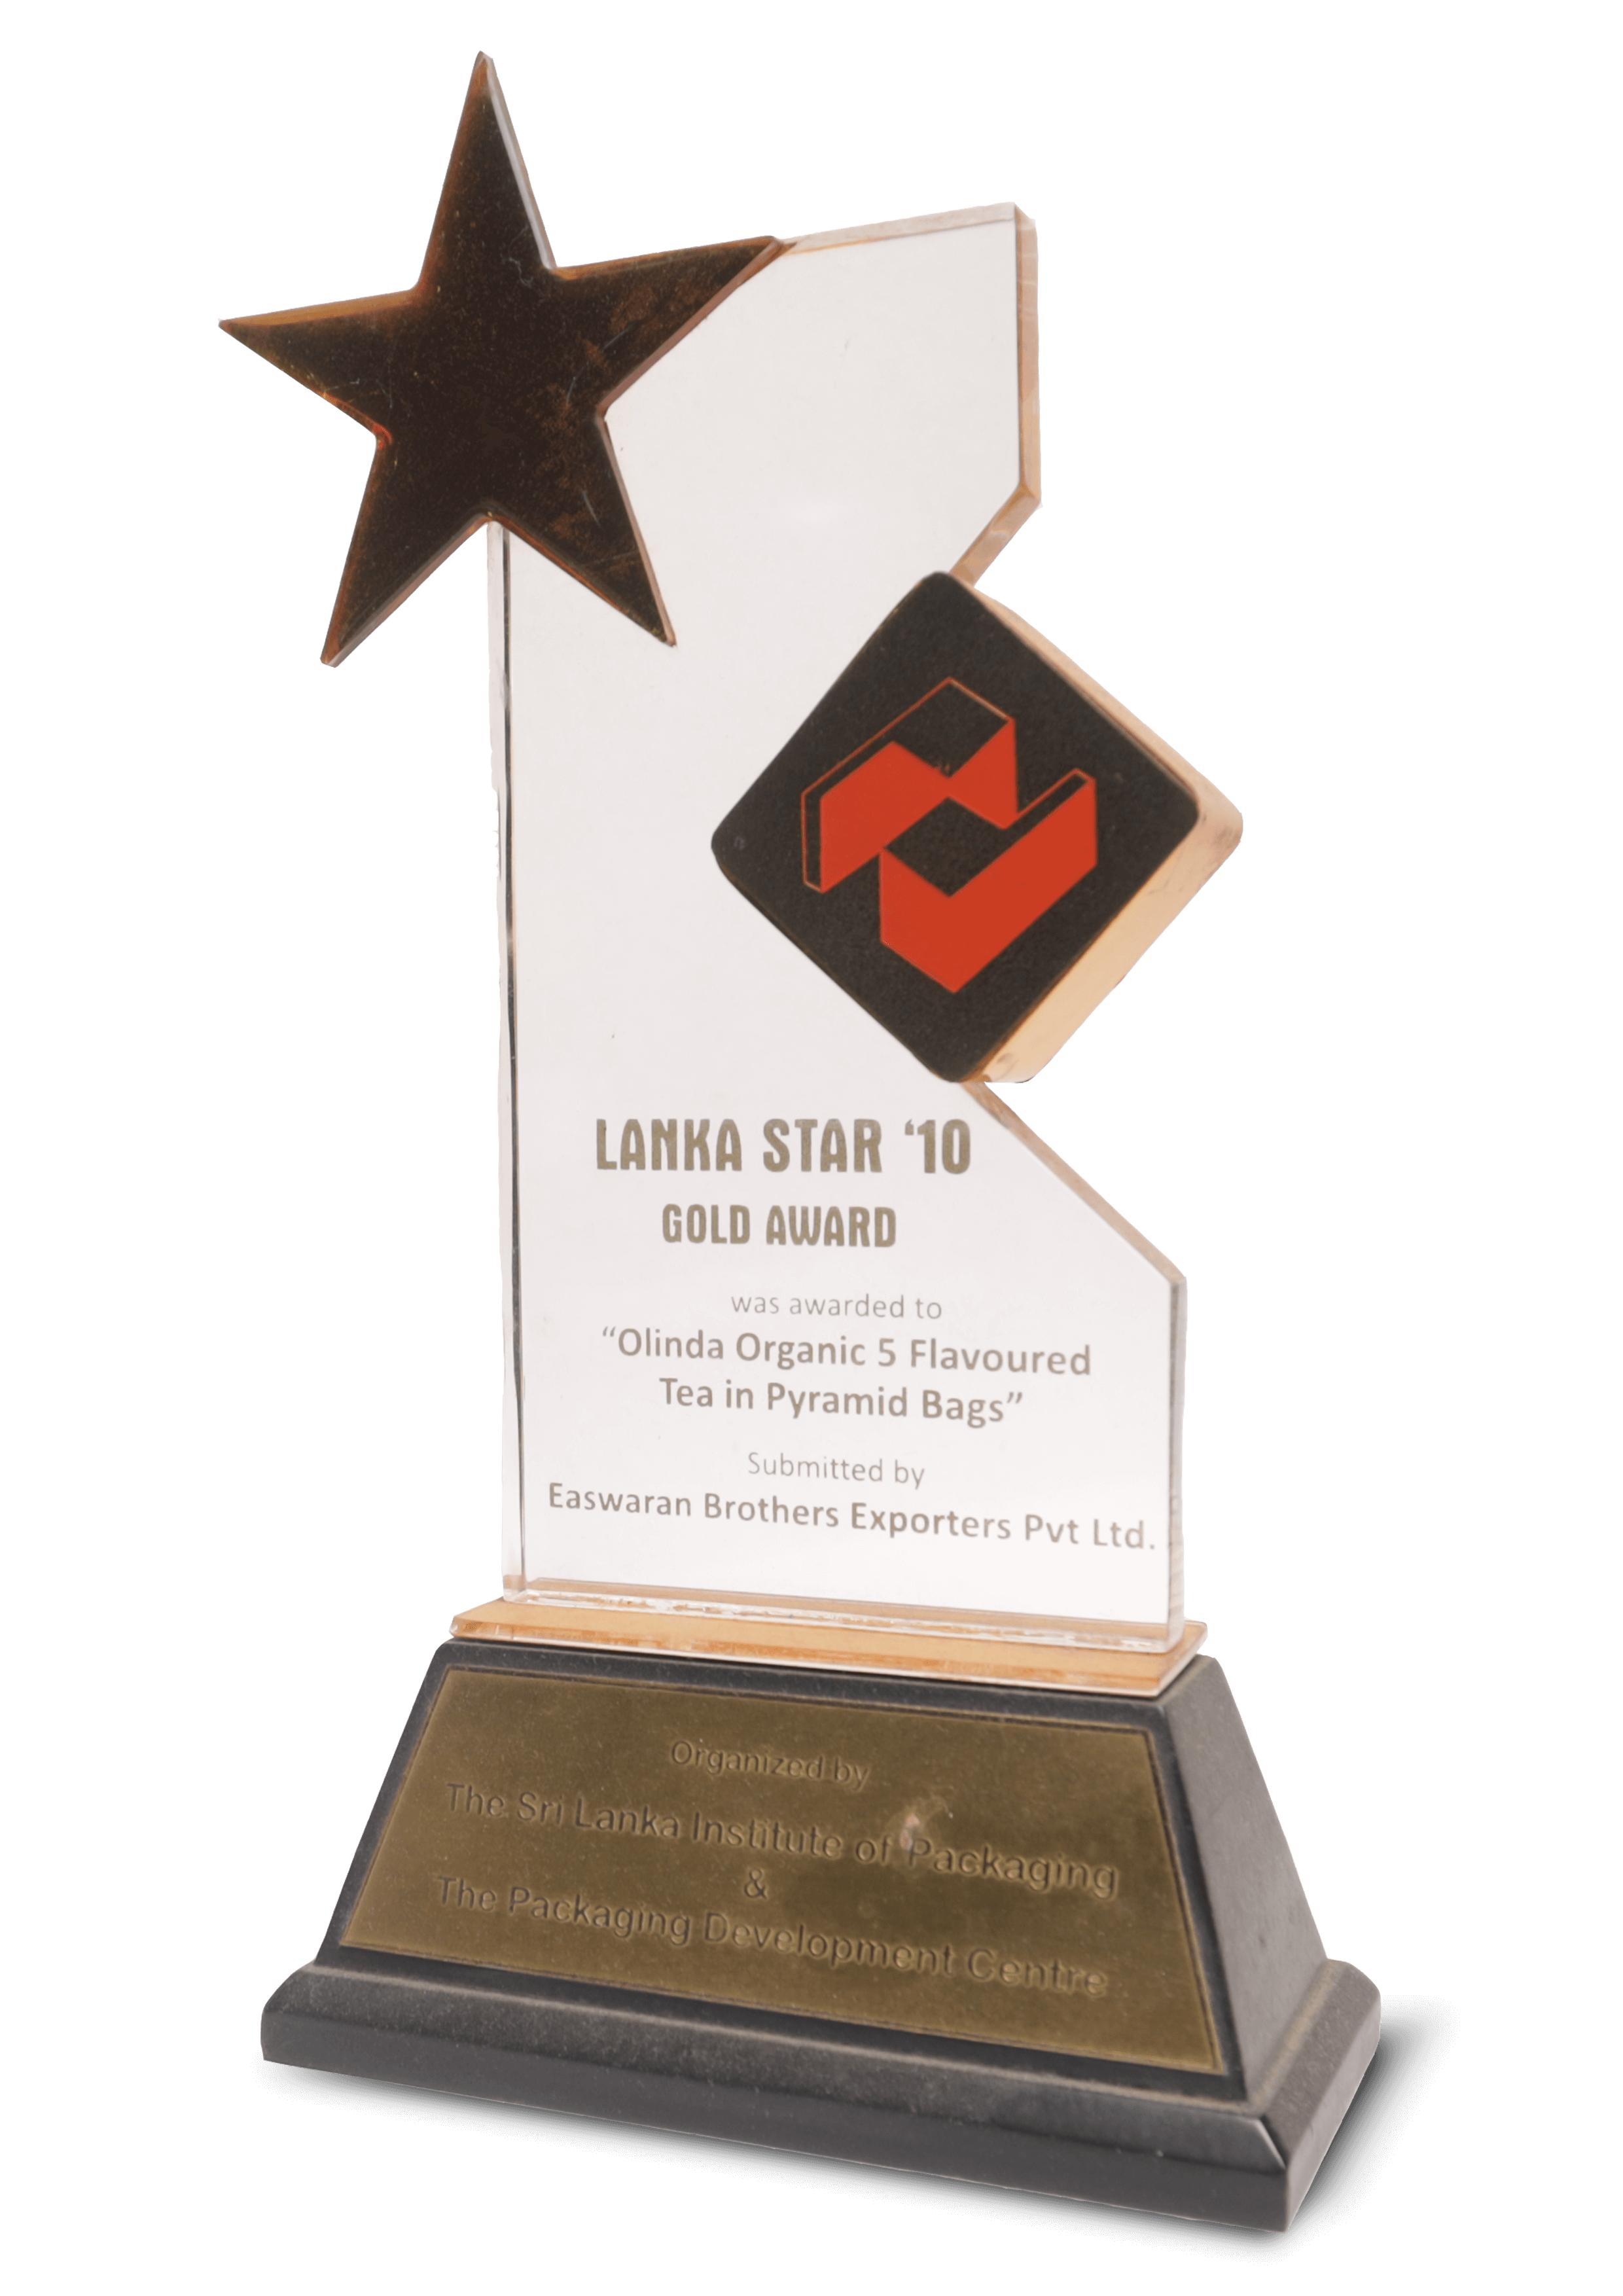 Lanka Star 2010 – Golden Award for Olinda Organic 5 Flavored Tea in Pyramid Bags